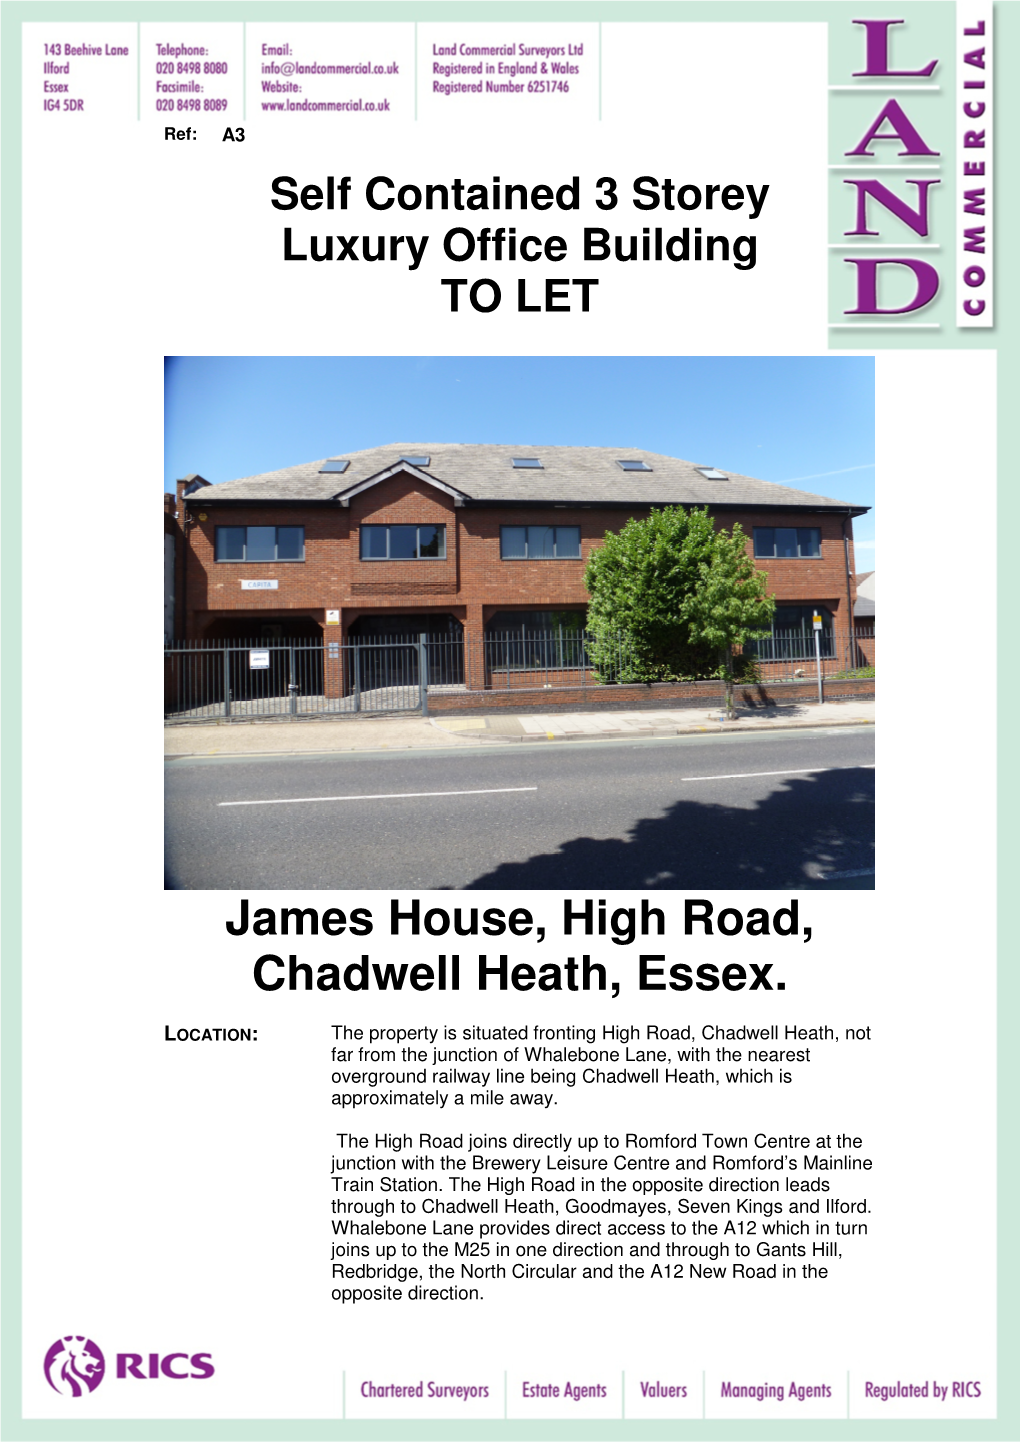 James House, High Road, Chadwell Heath, Essex